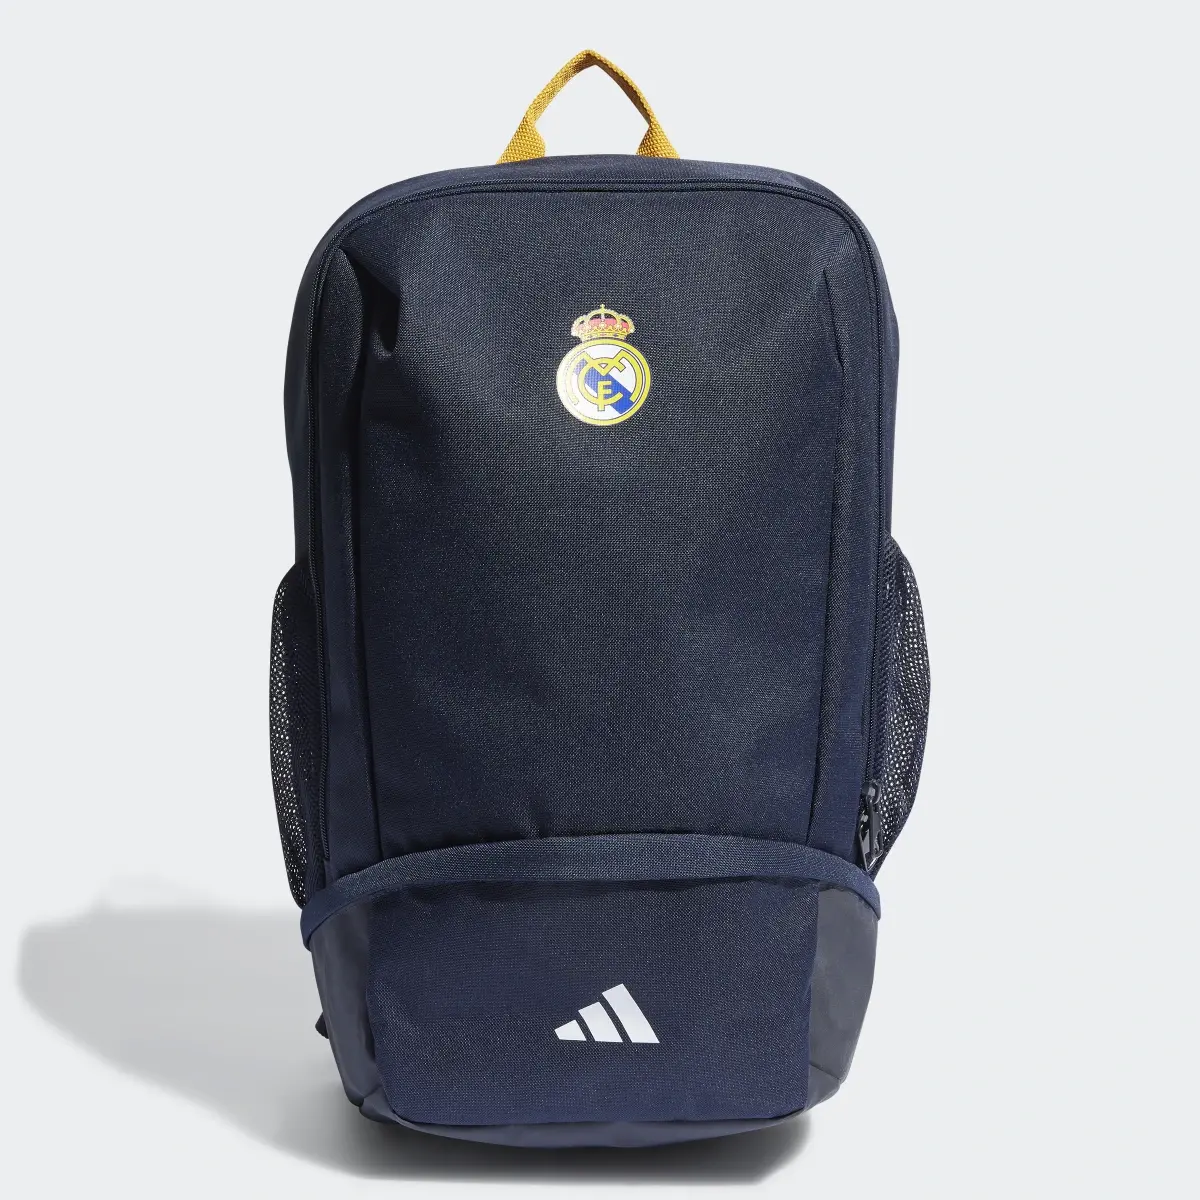 Adidas Real Madrid Backpack. 1